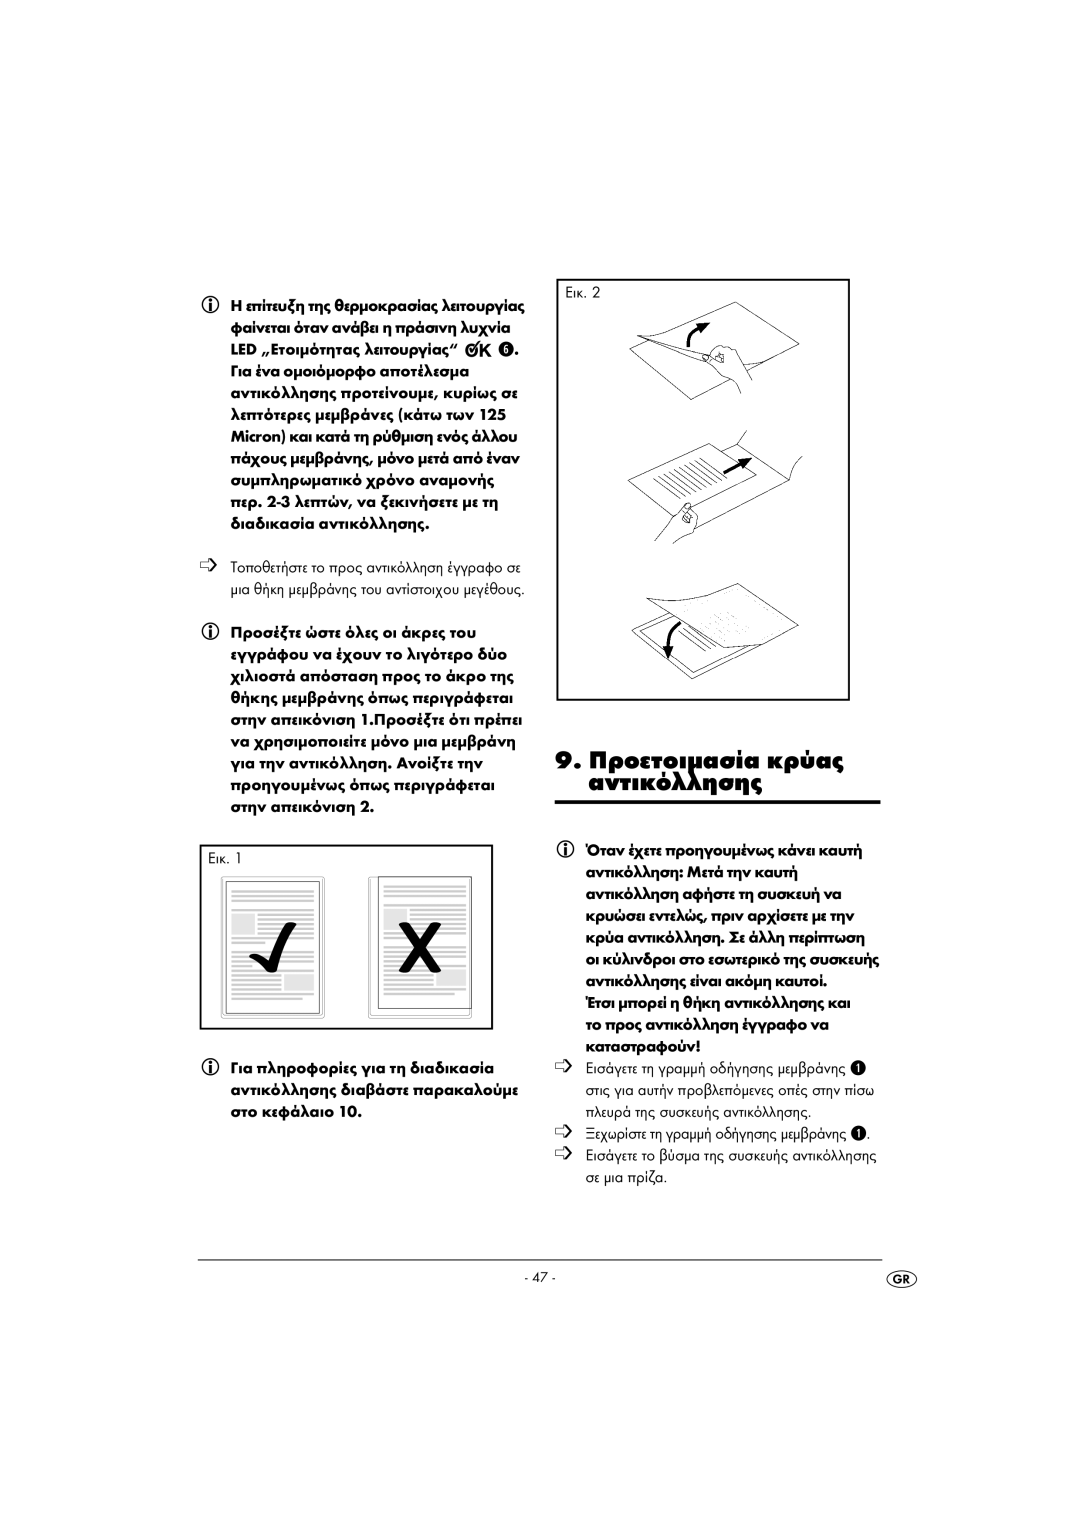 Kompernass KH 4412 manual 9. Προετοιµασία κρύας, αντικόλλησης, οι κύλινδροι στο εσωτερικό της συσκευής 